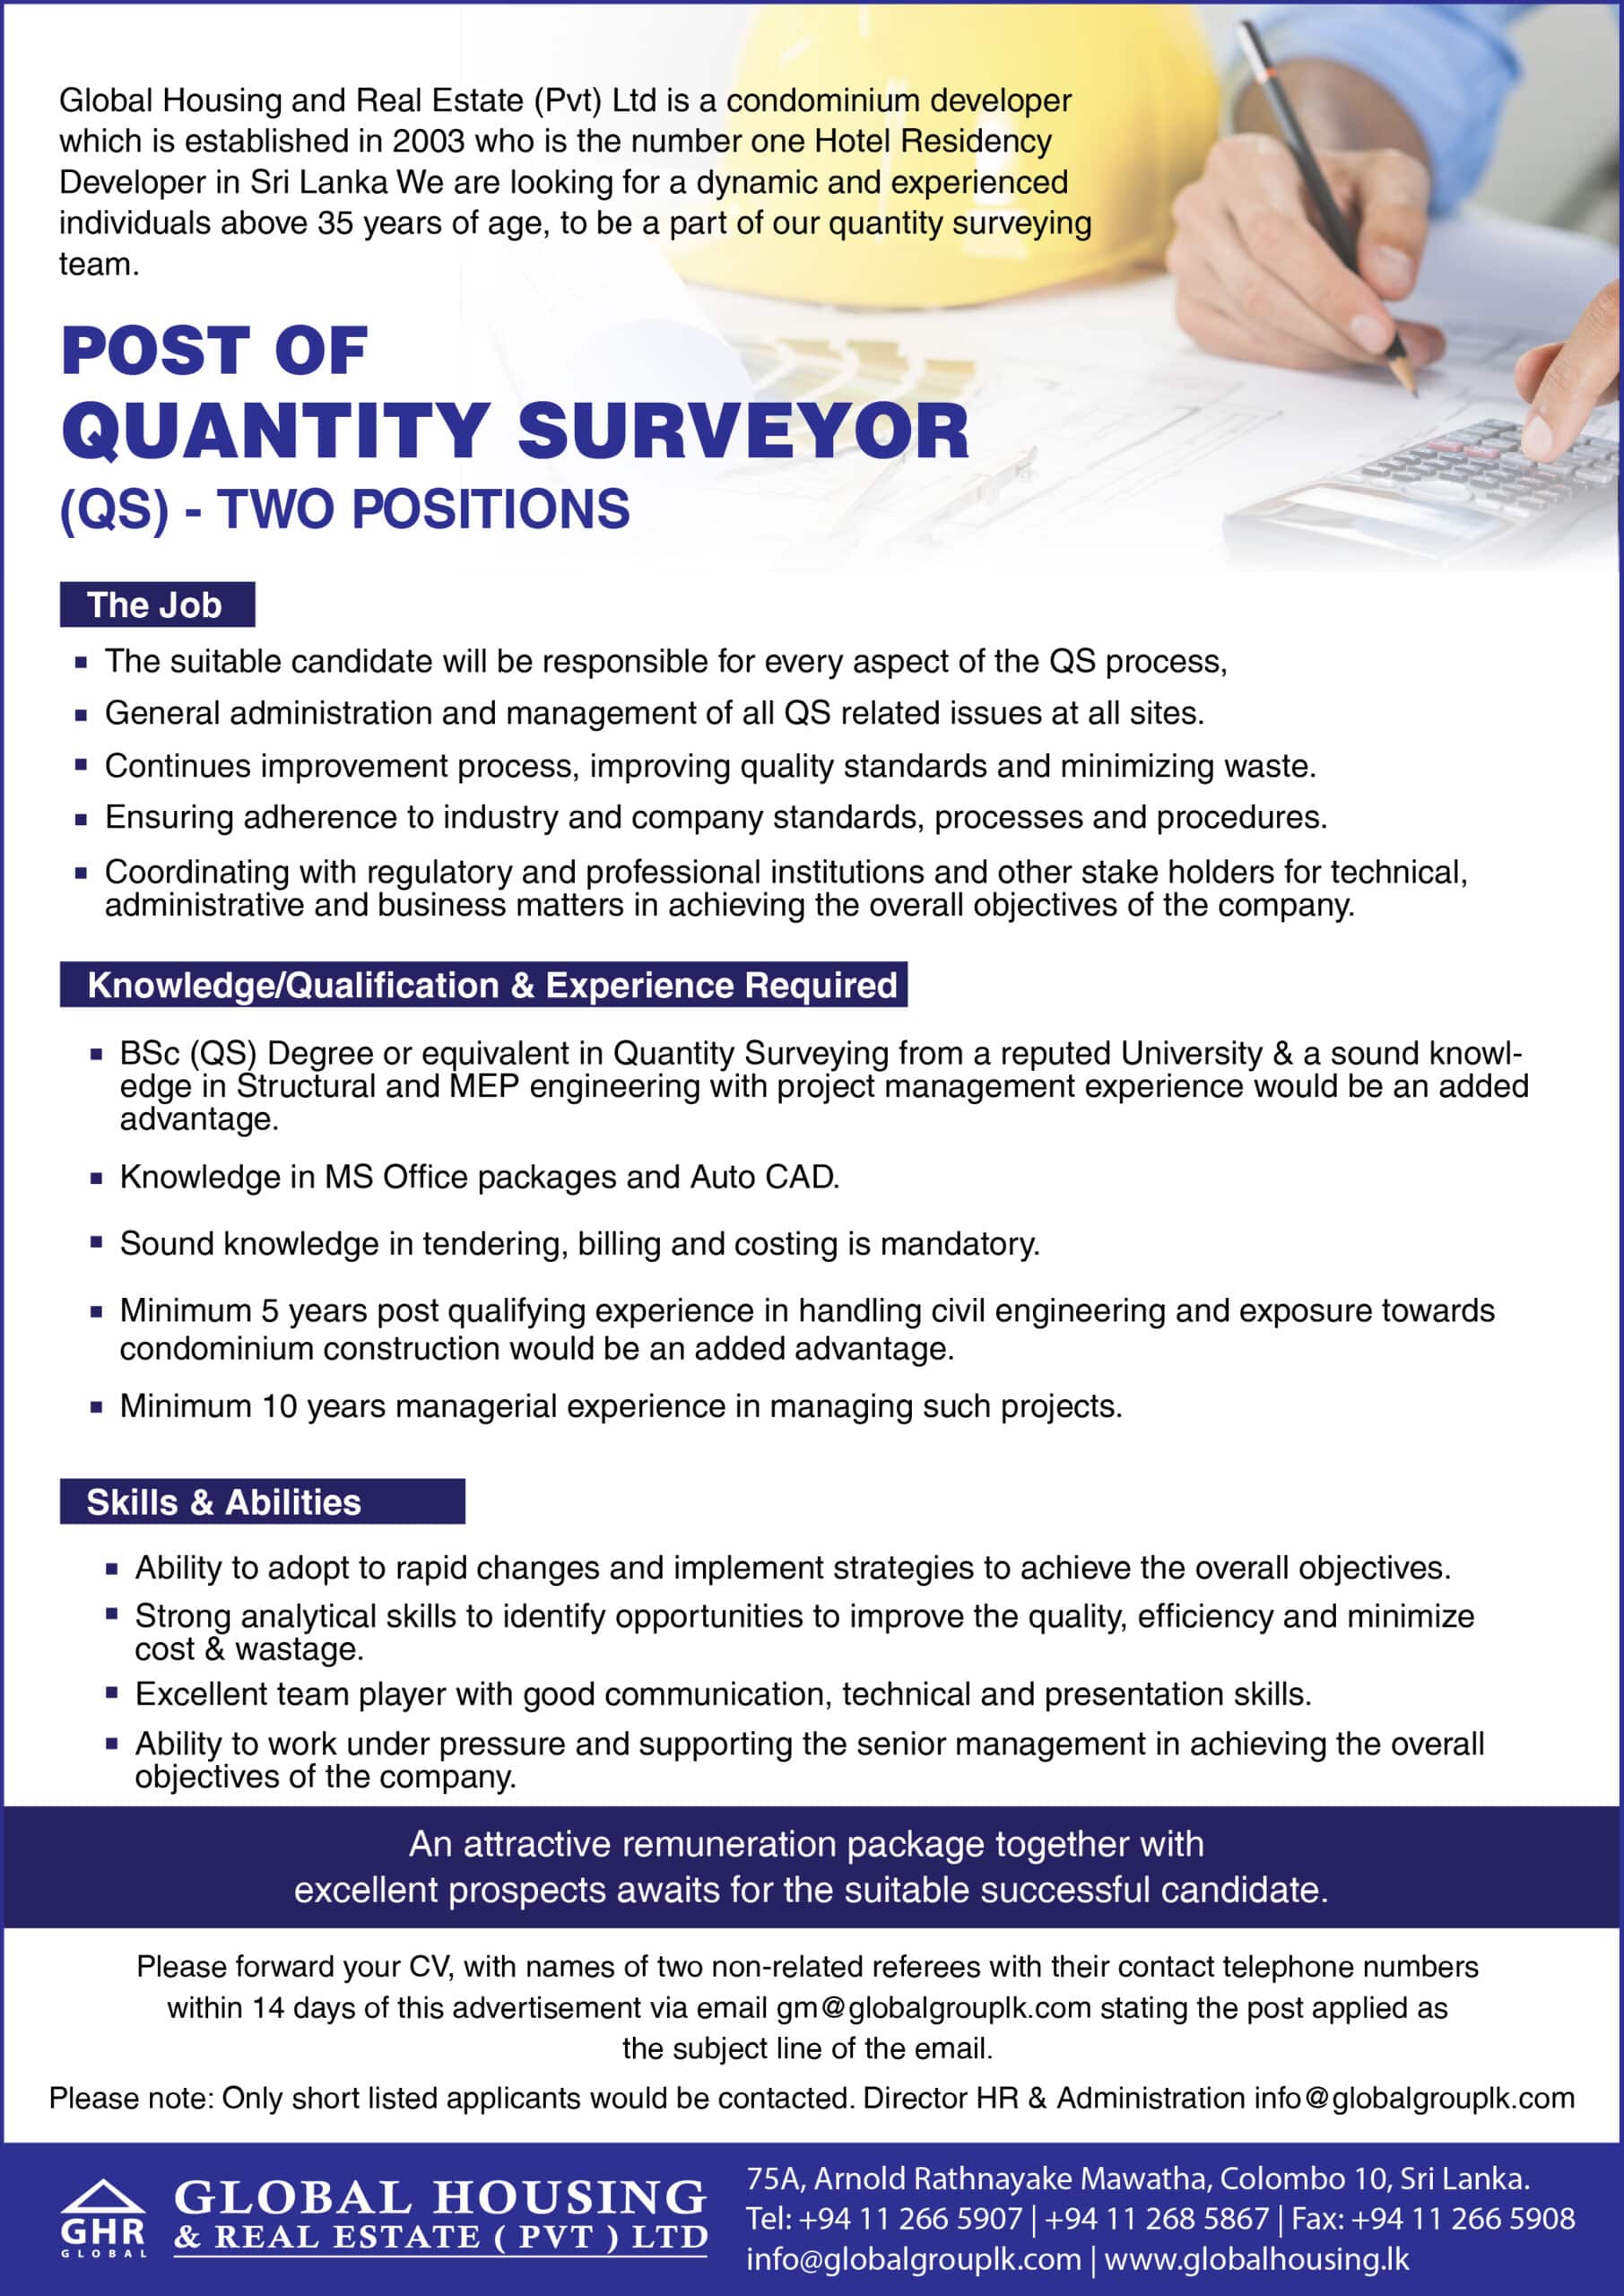 An image of the quantity surveyor vacancy sri lanka